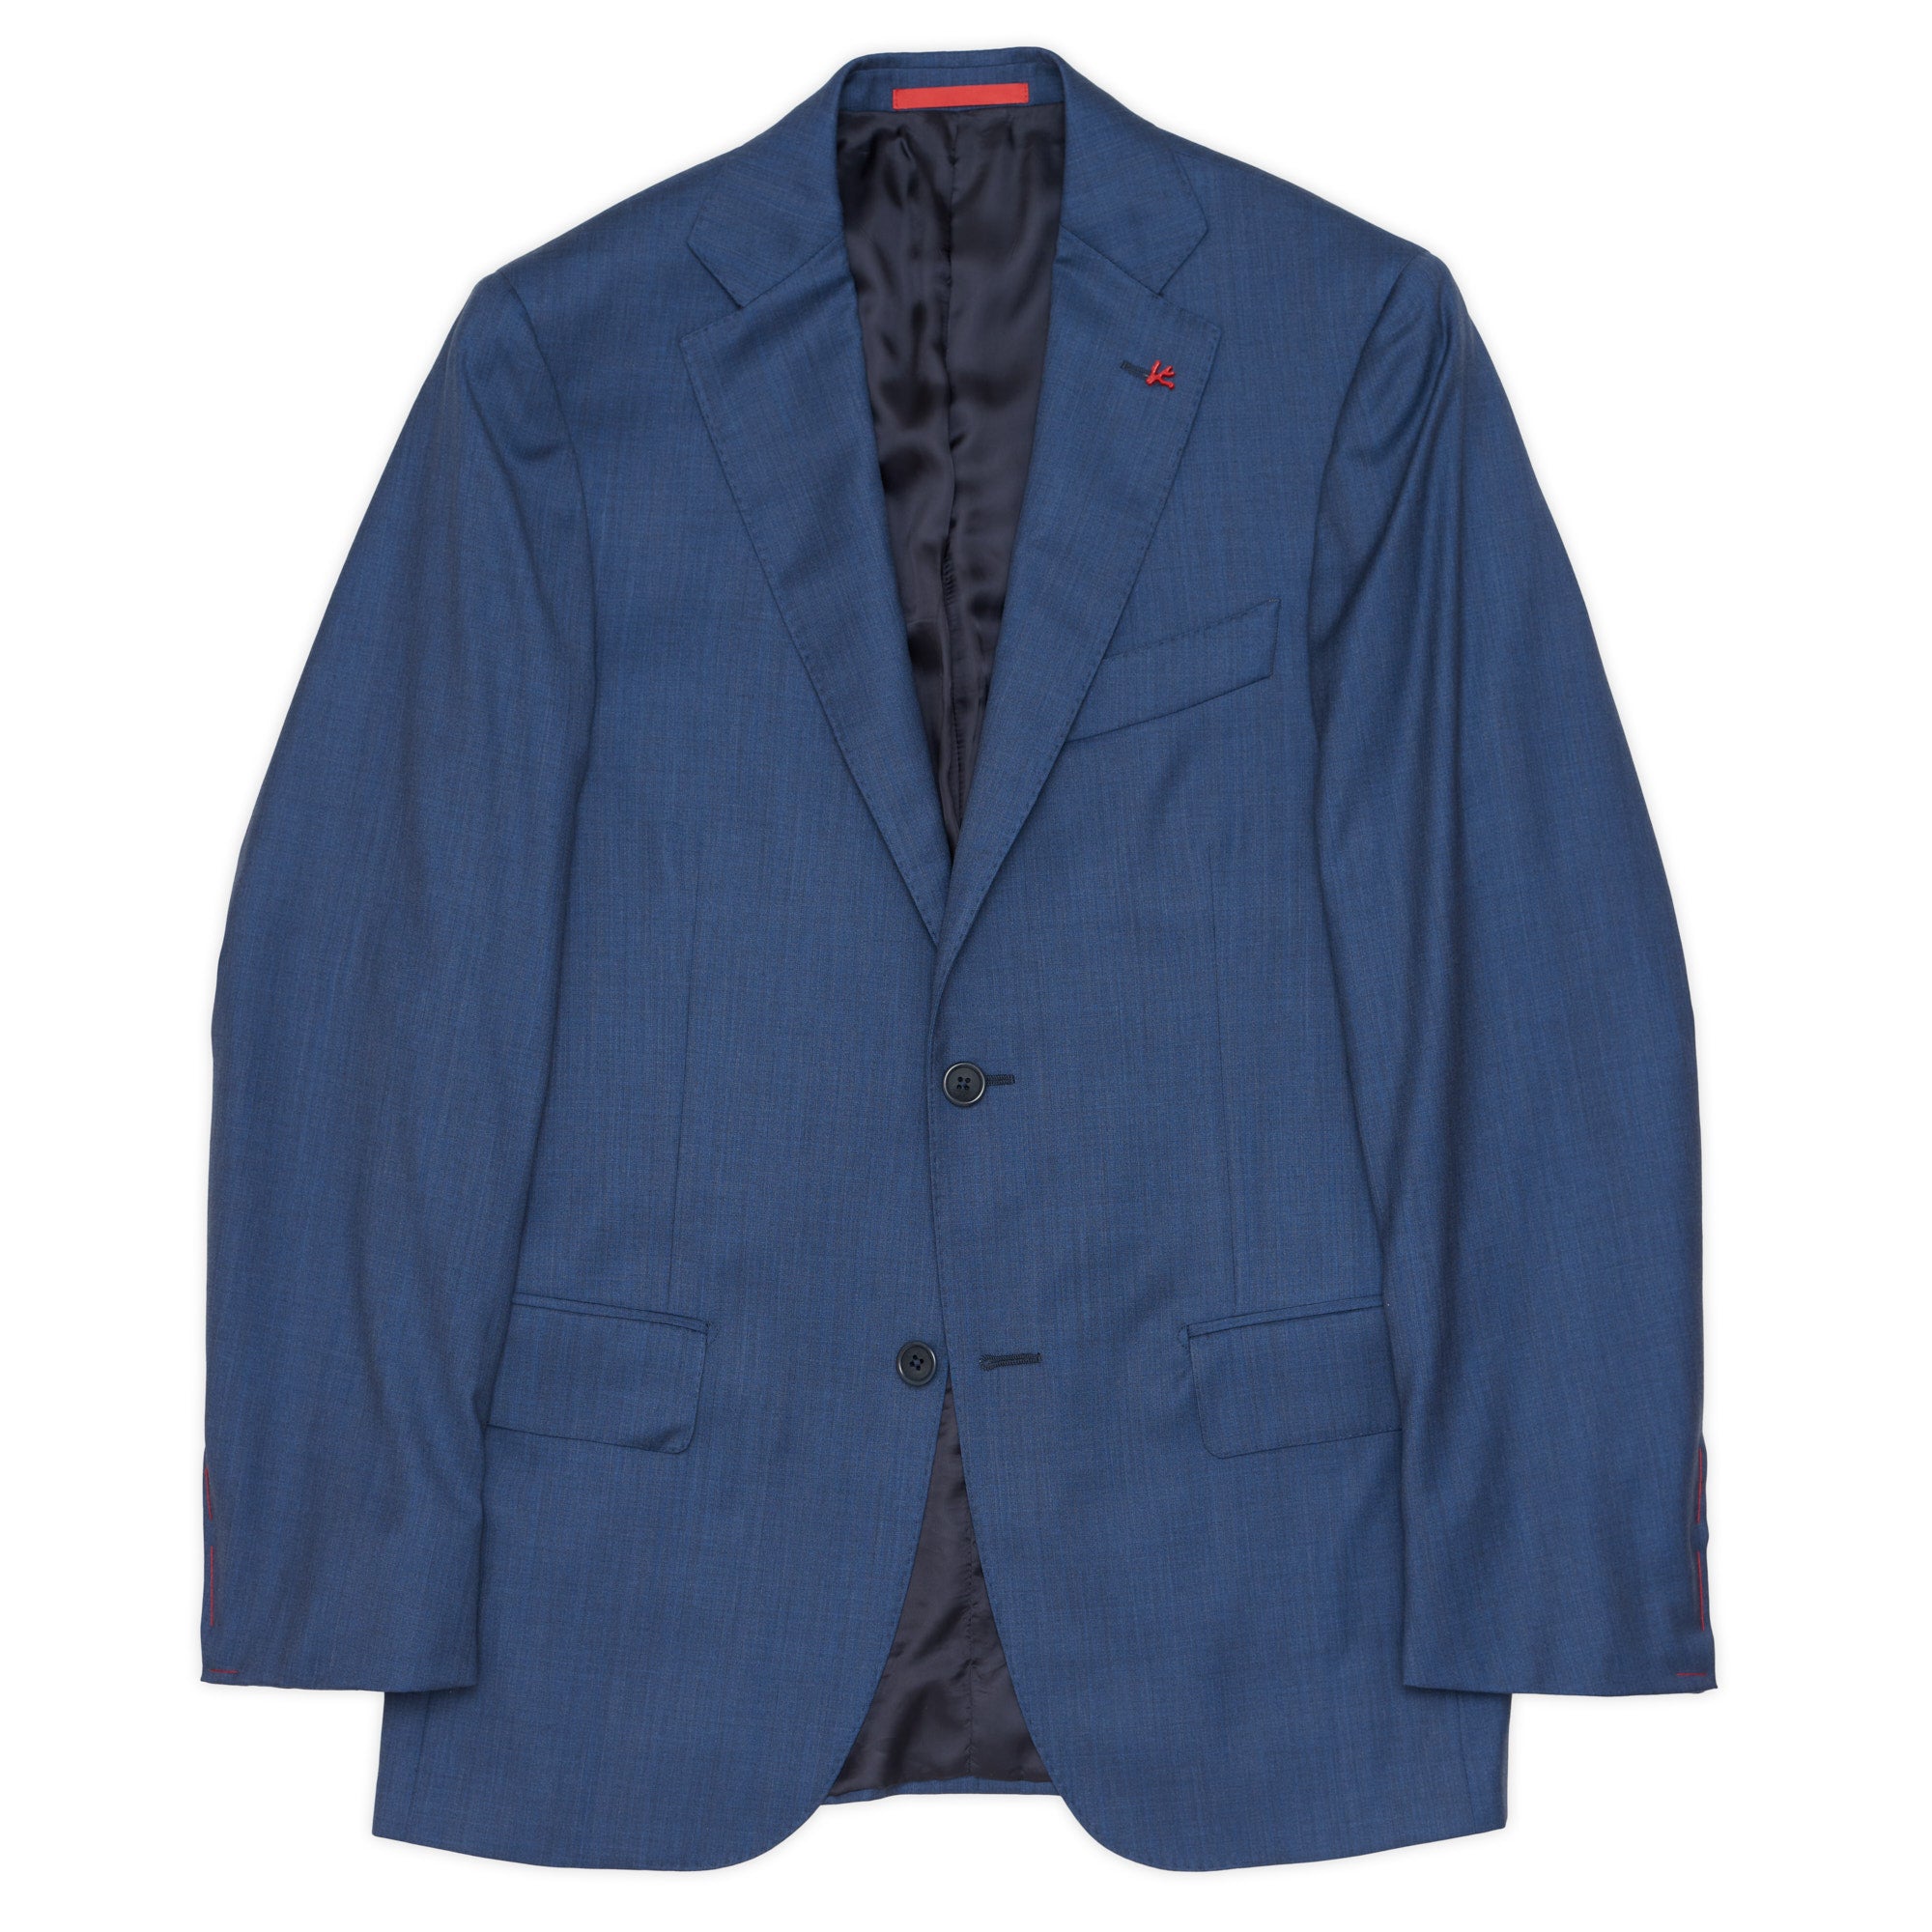 ISAIA Napoli Handmade Blue Wool Blend Jacket Sport Coat EU 44 NEW US 34 ISAIA